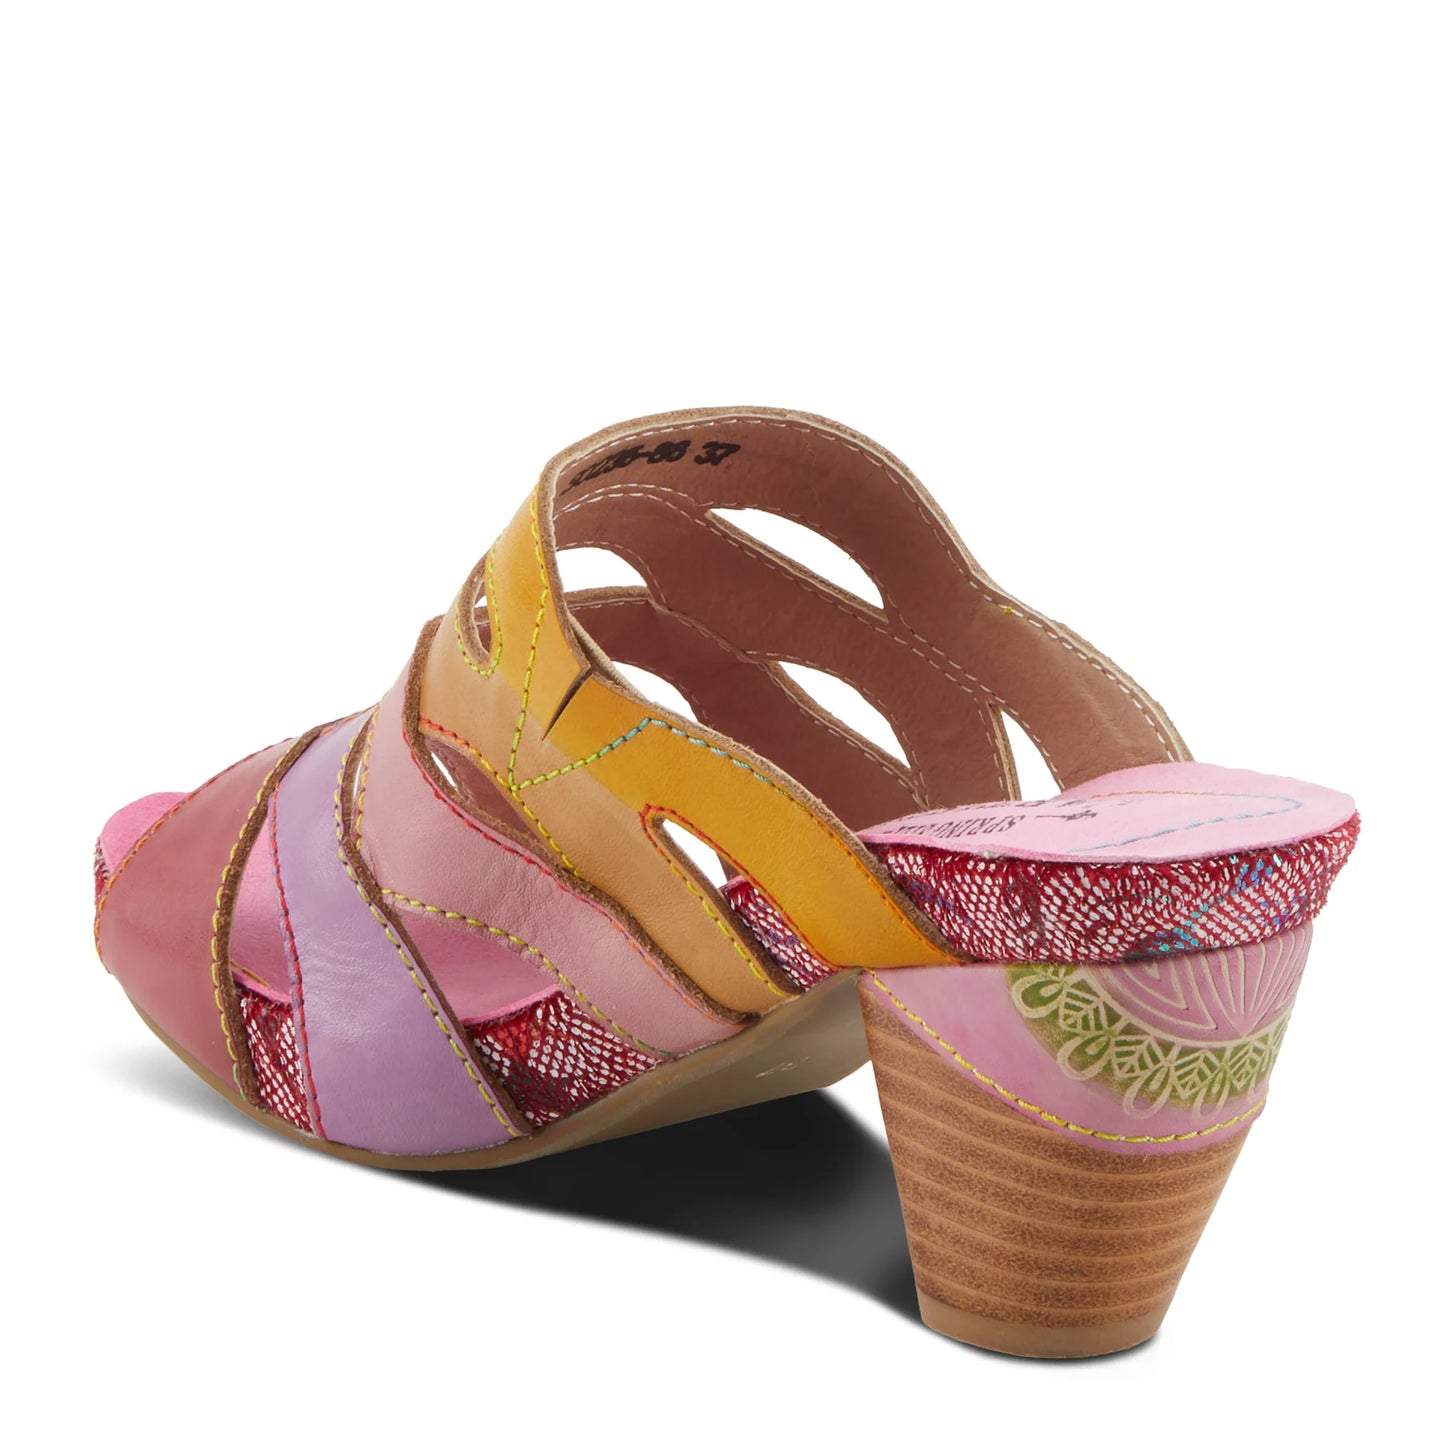 L'Artiste by Spring Step Women's Pita Sandals - Pink Multi